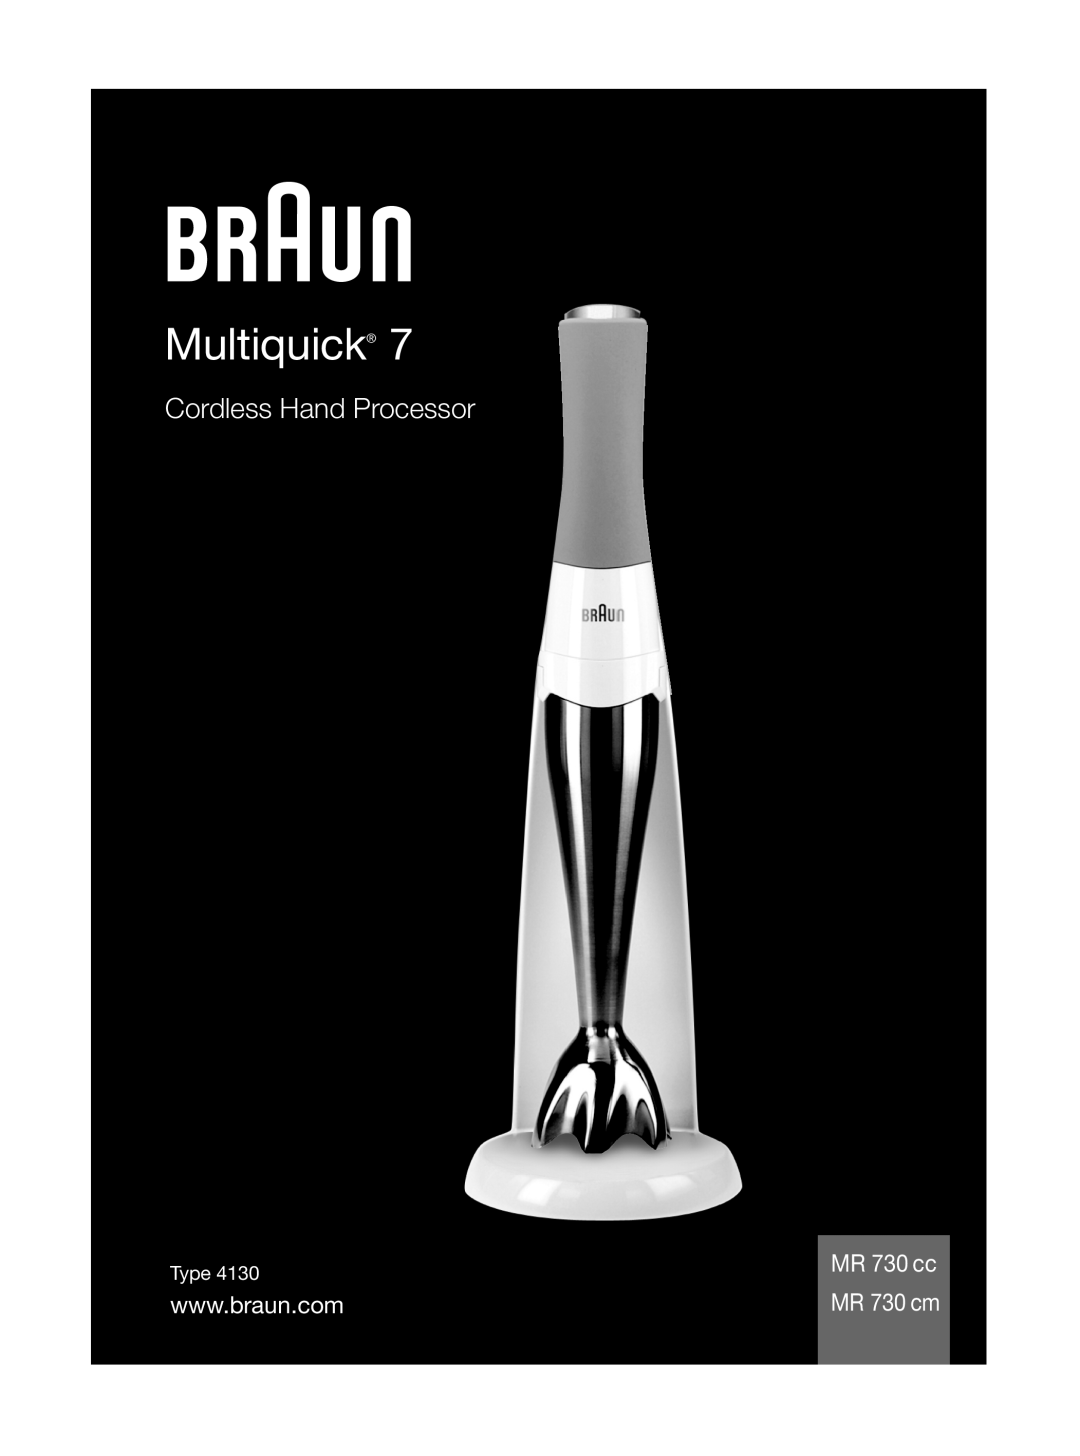 Braun 4130 manual Multiquick, Cordless Hand Processor, MR 730 cc, MR 730 cm, Type 